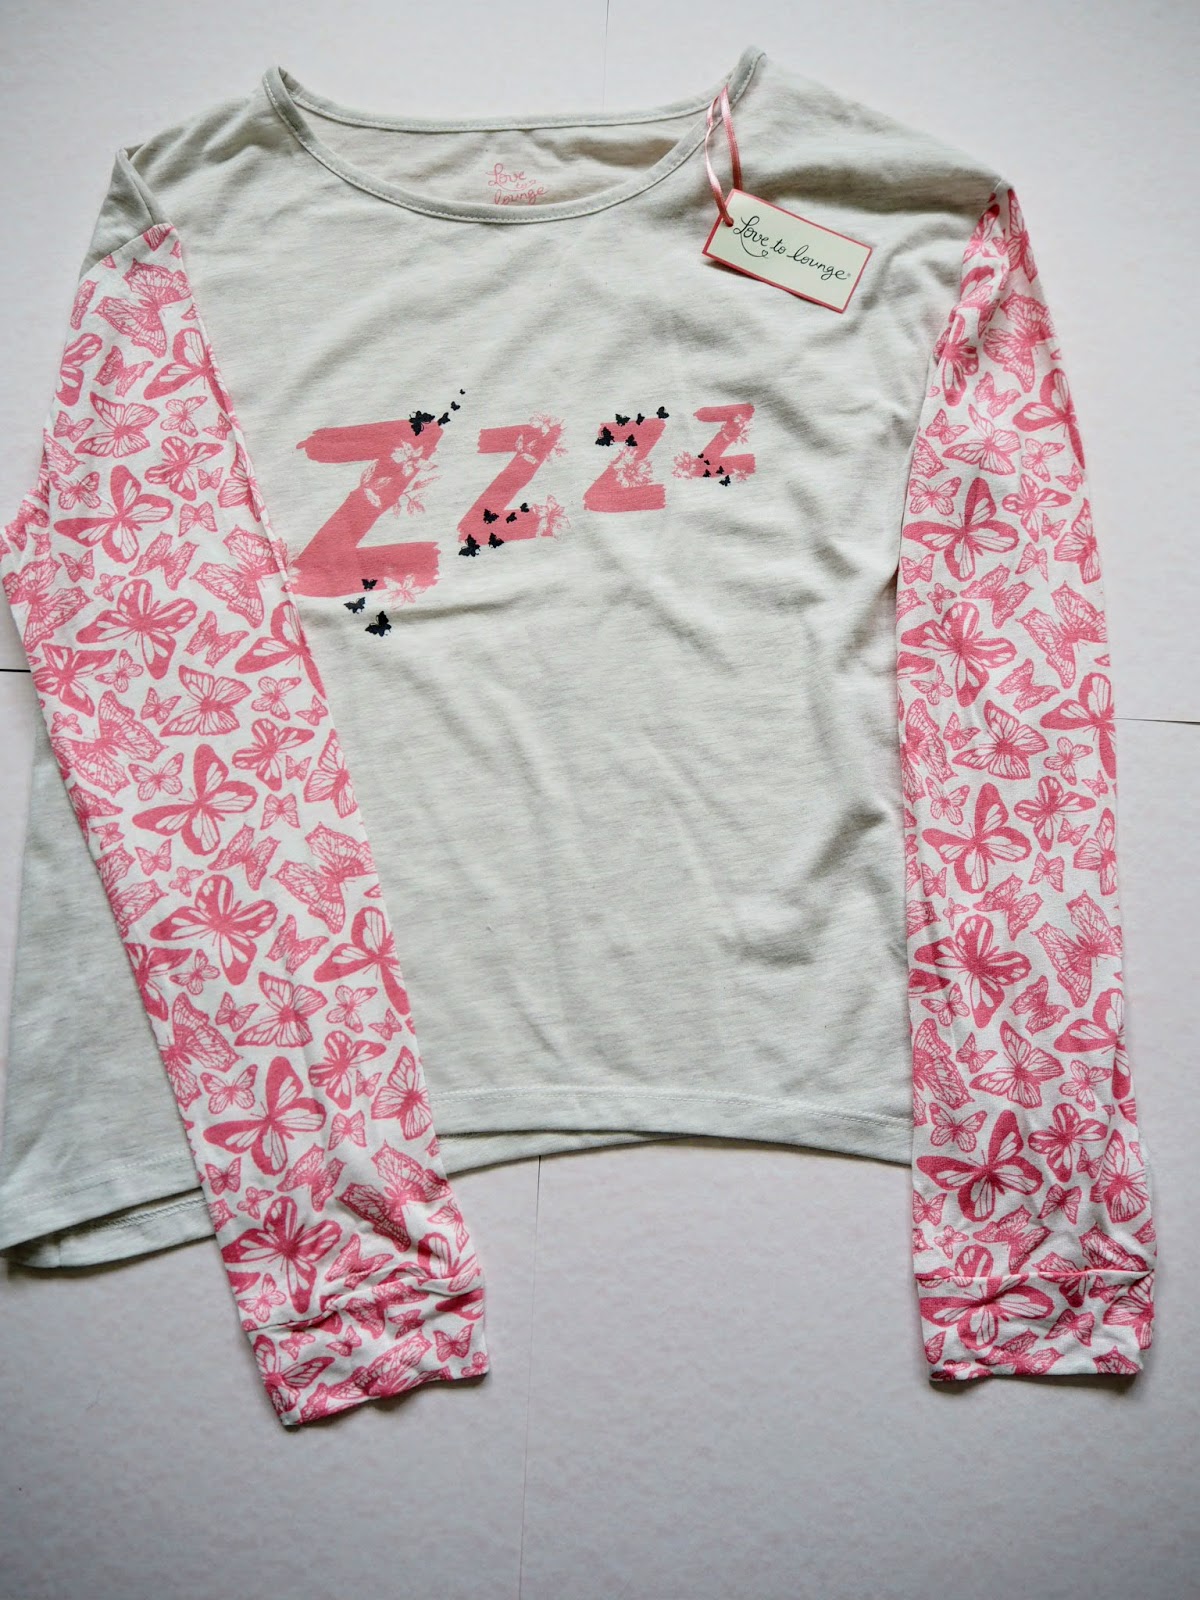 Primark Pink Butterfly Pyjama Top The Best Version of Kelly